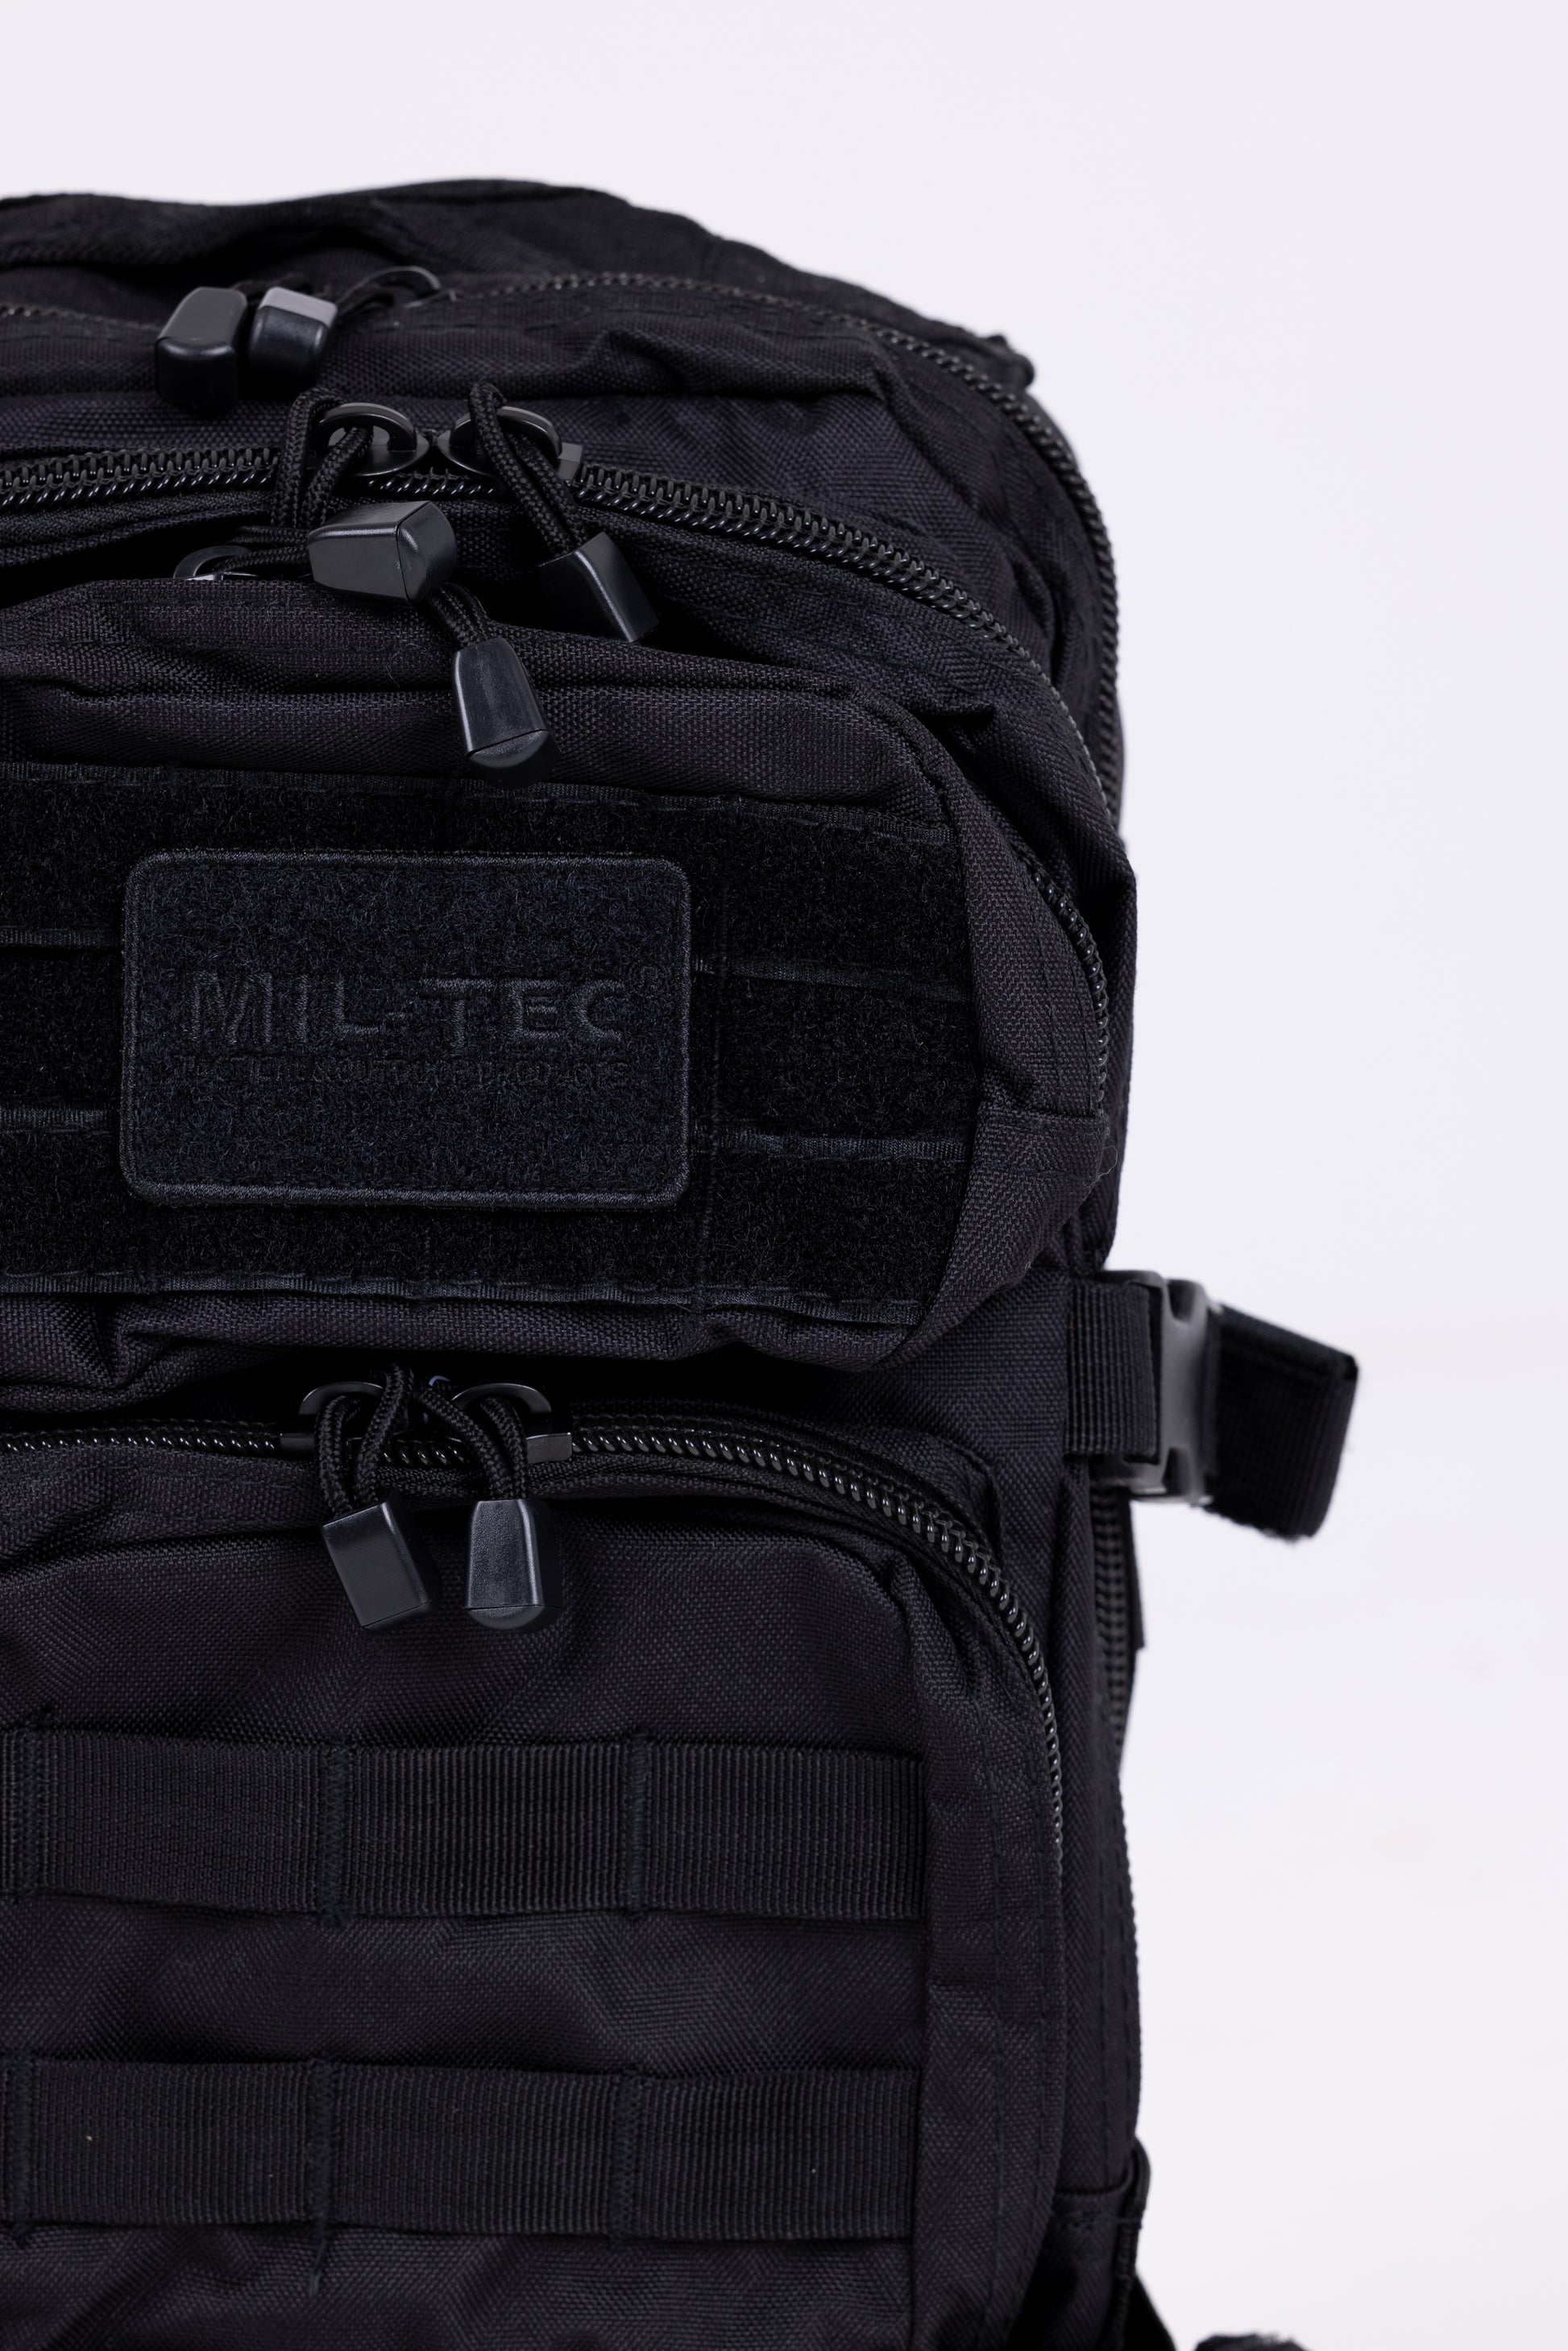 Mil-Tec 20L Backpack – Uniforme